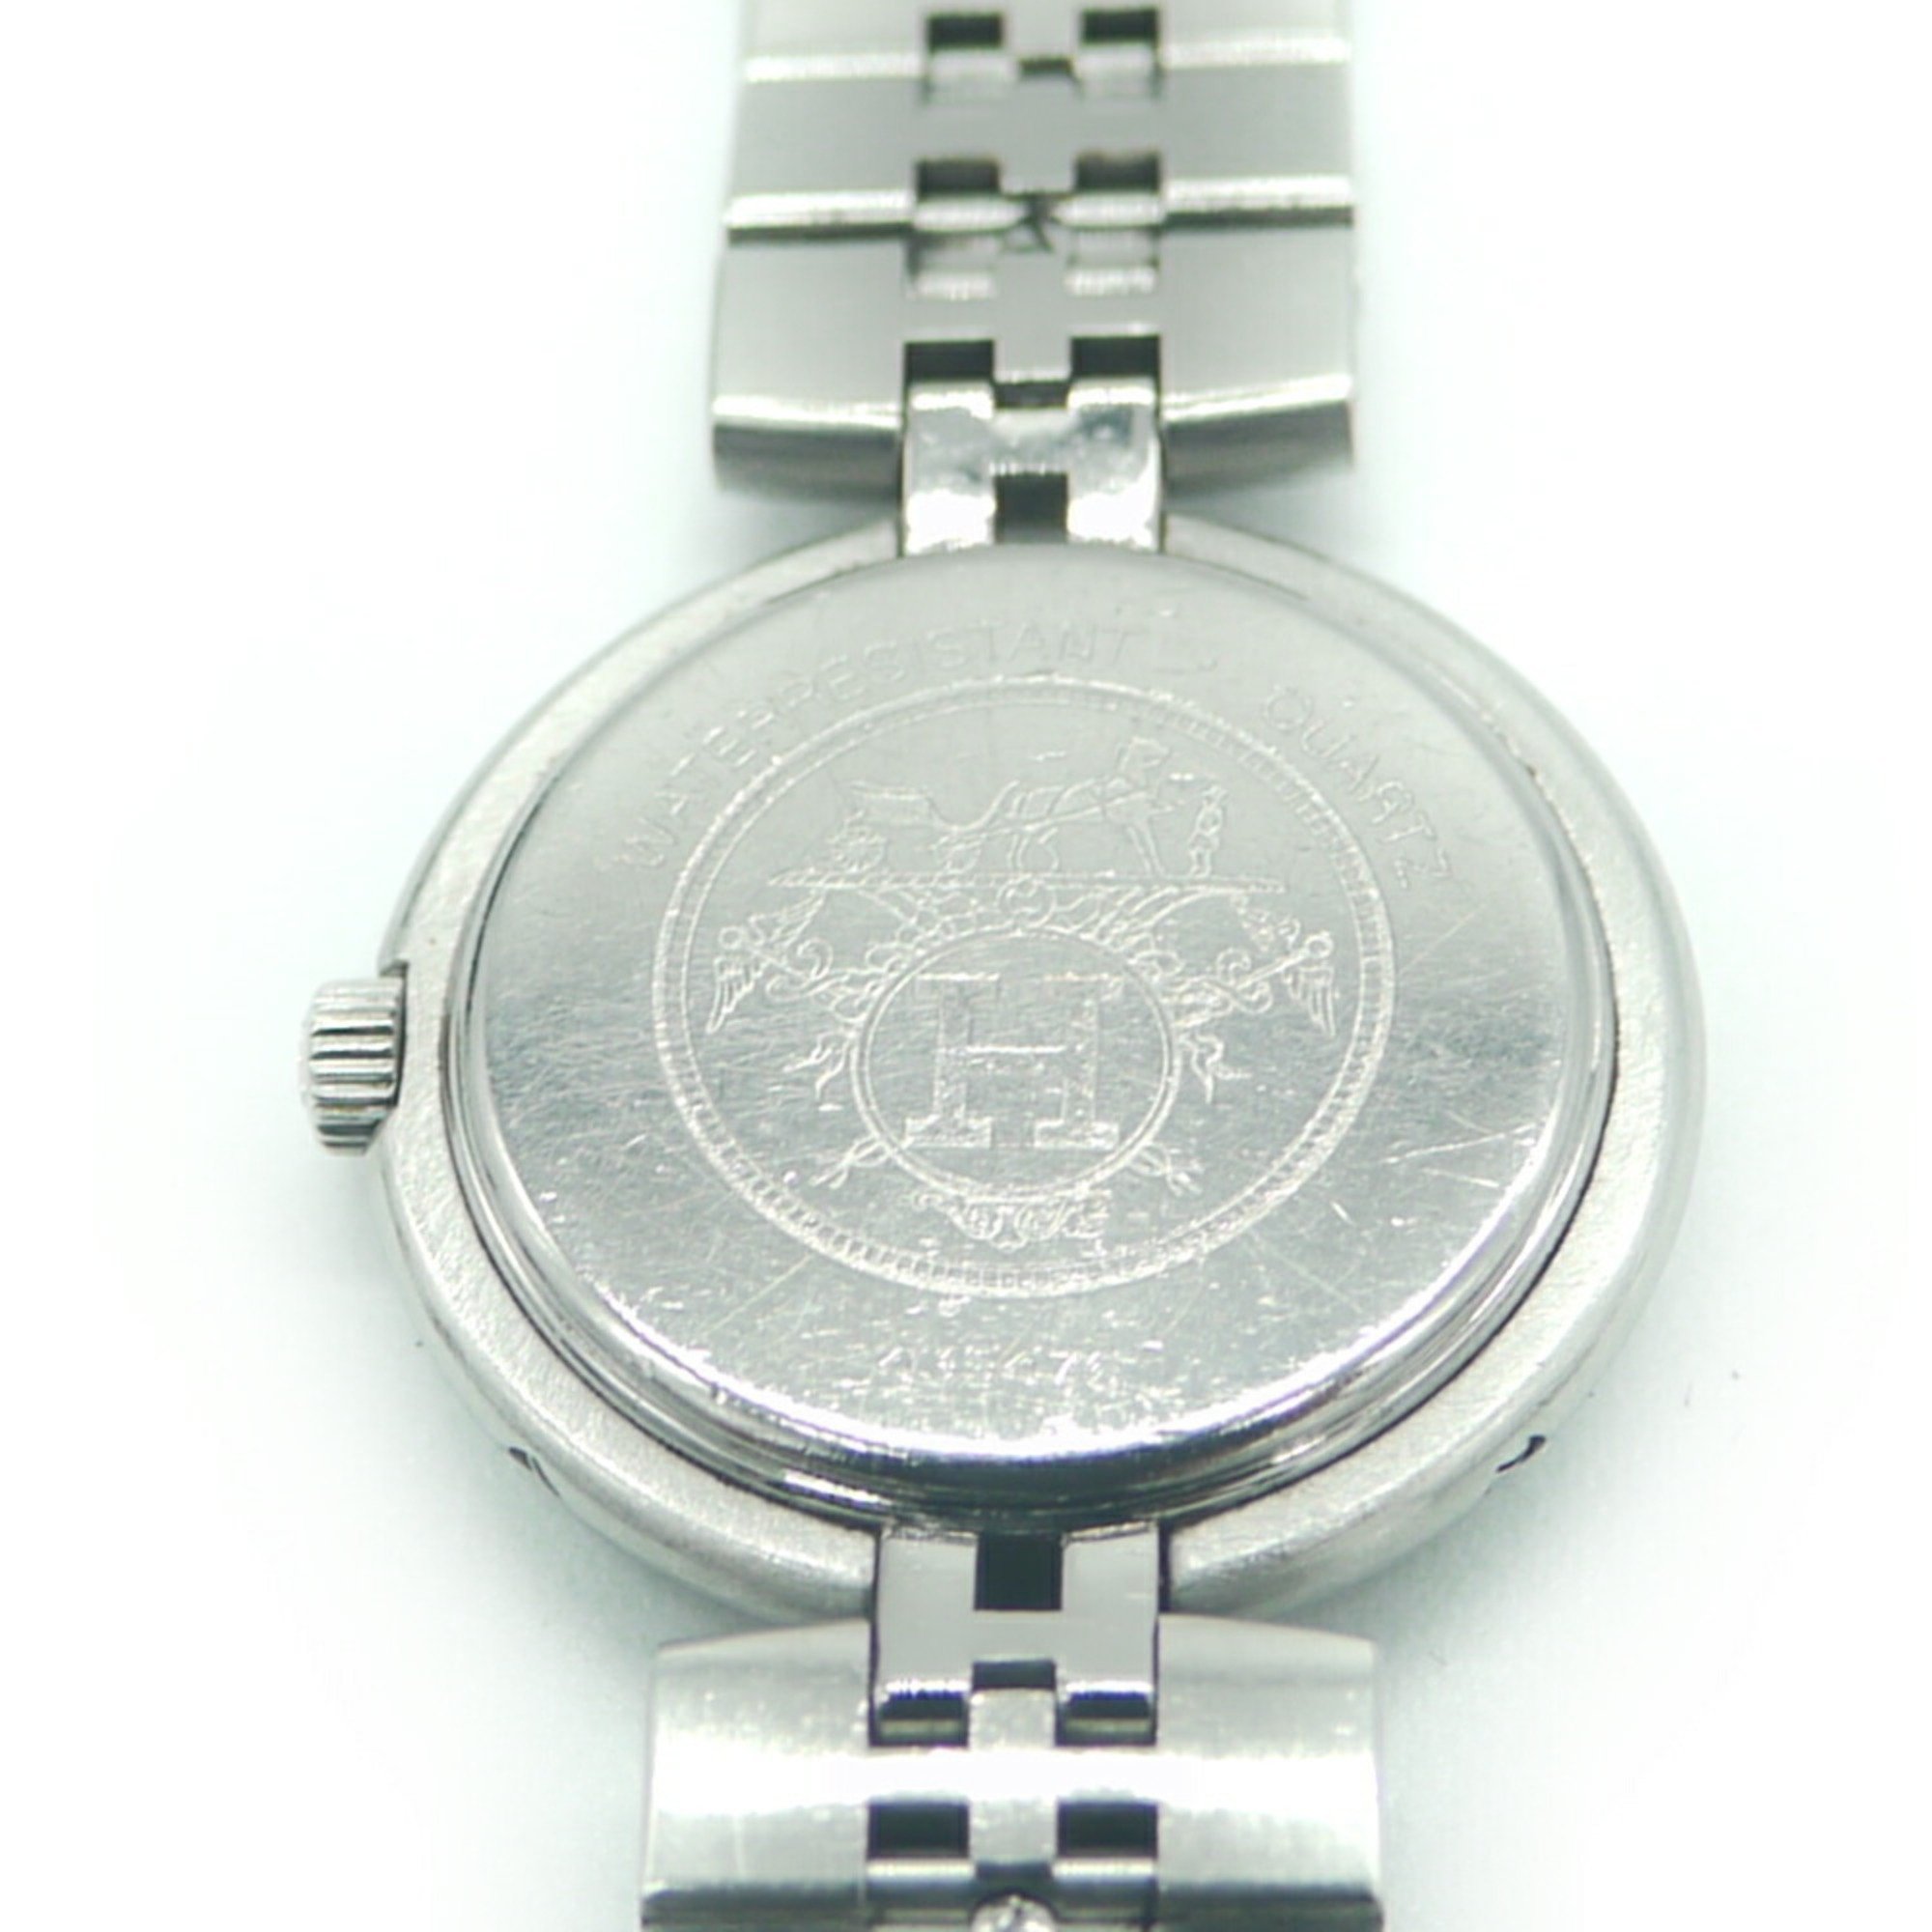 HERMES Profile Wristwatch Quartz White Dial Ladies Watch